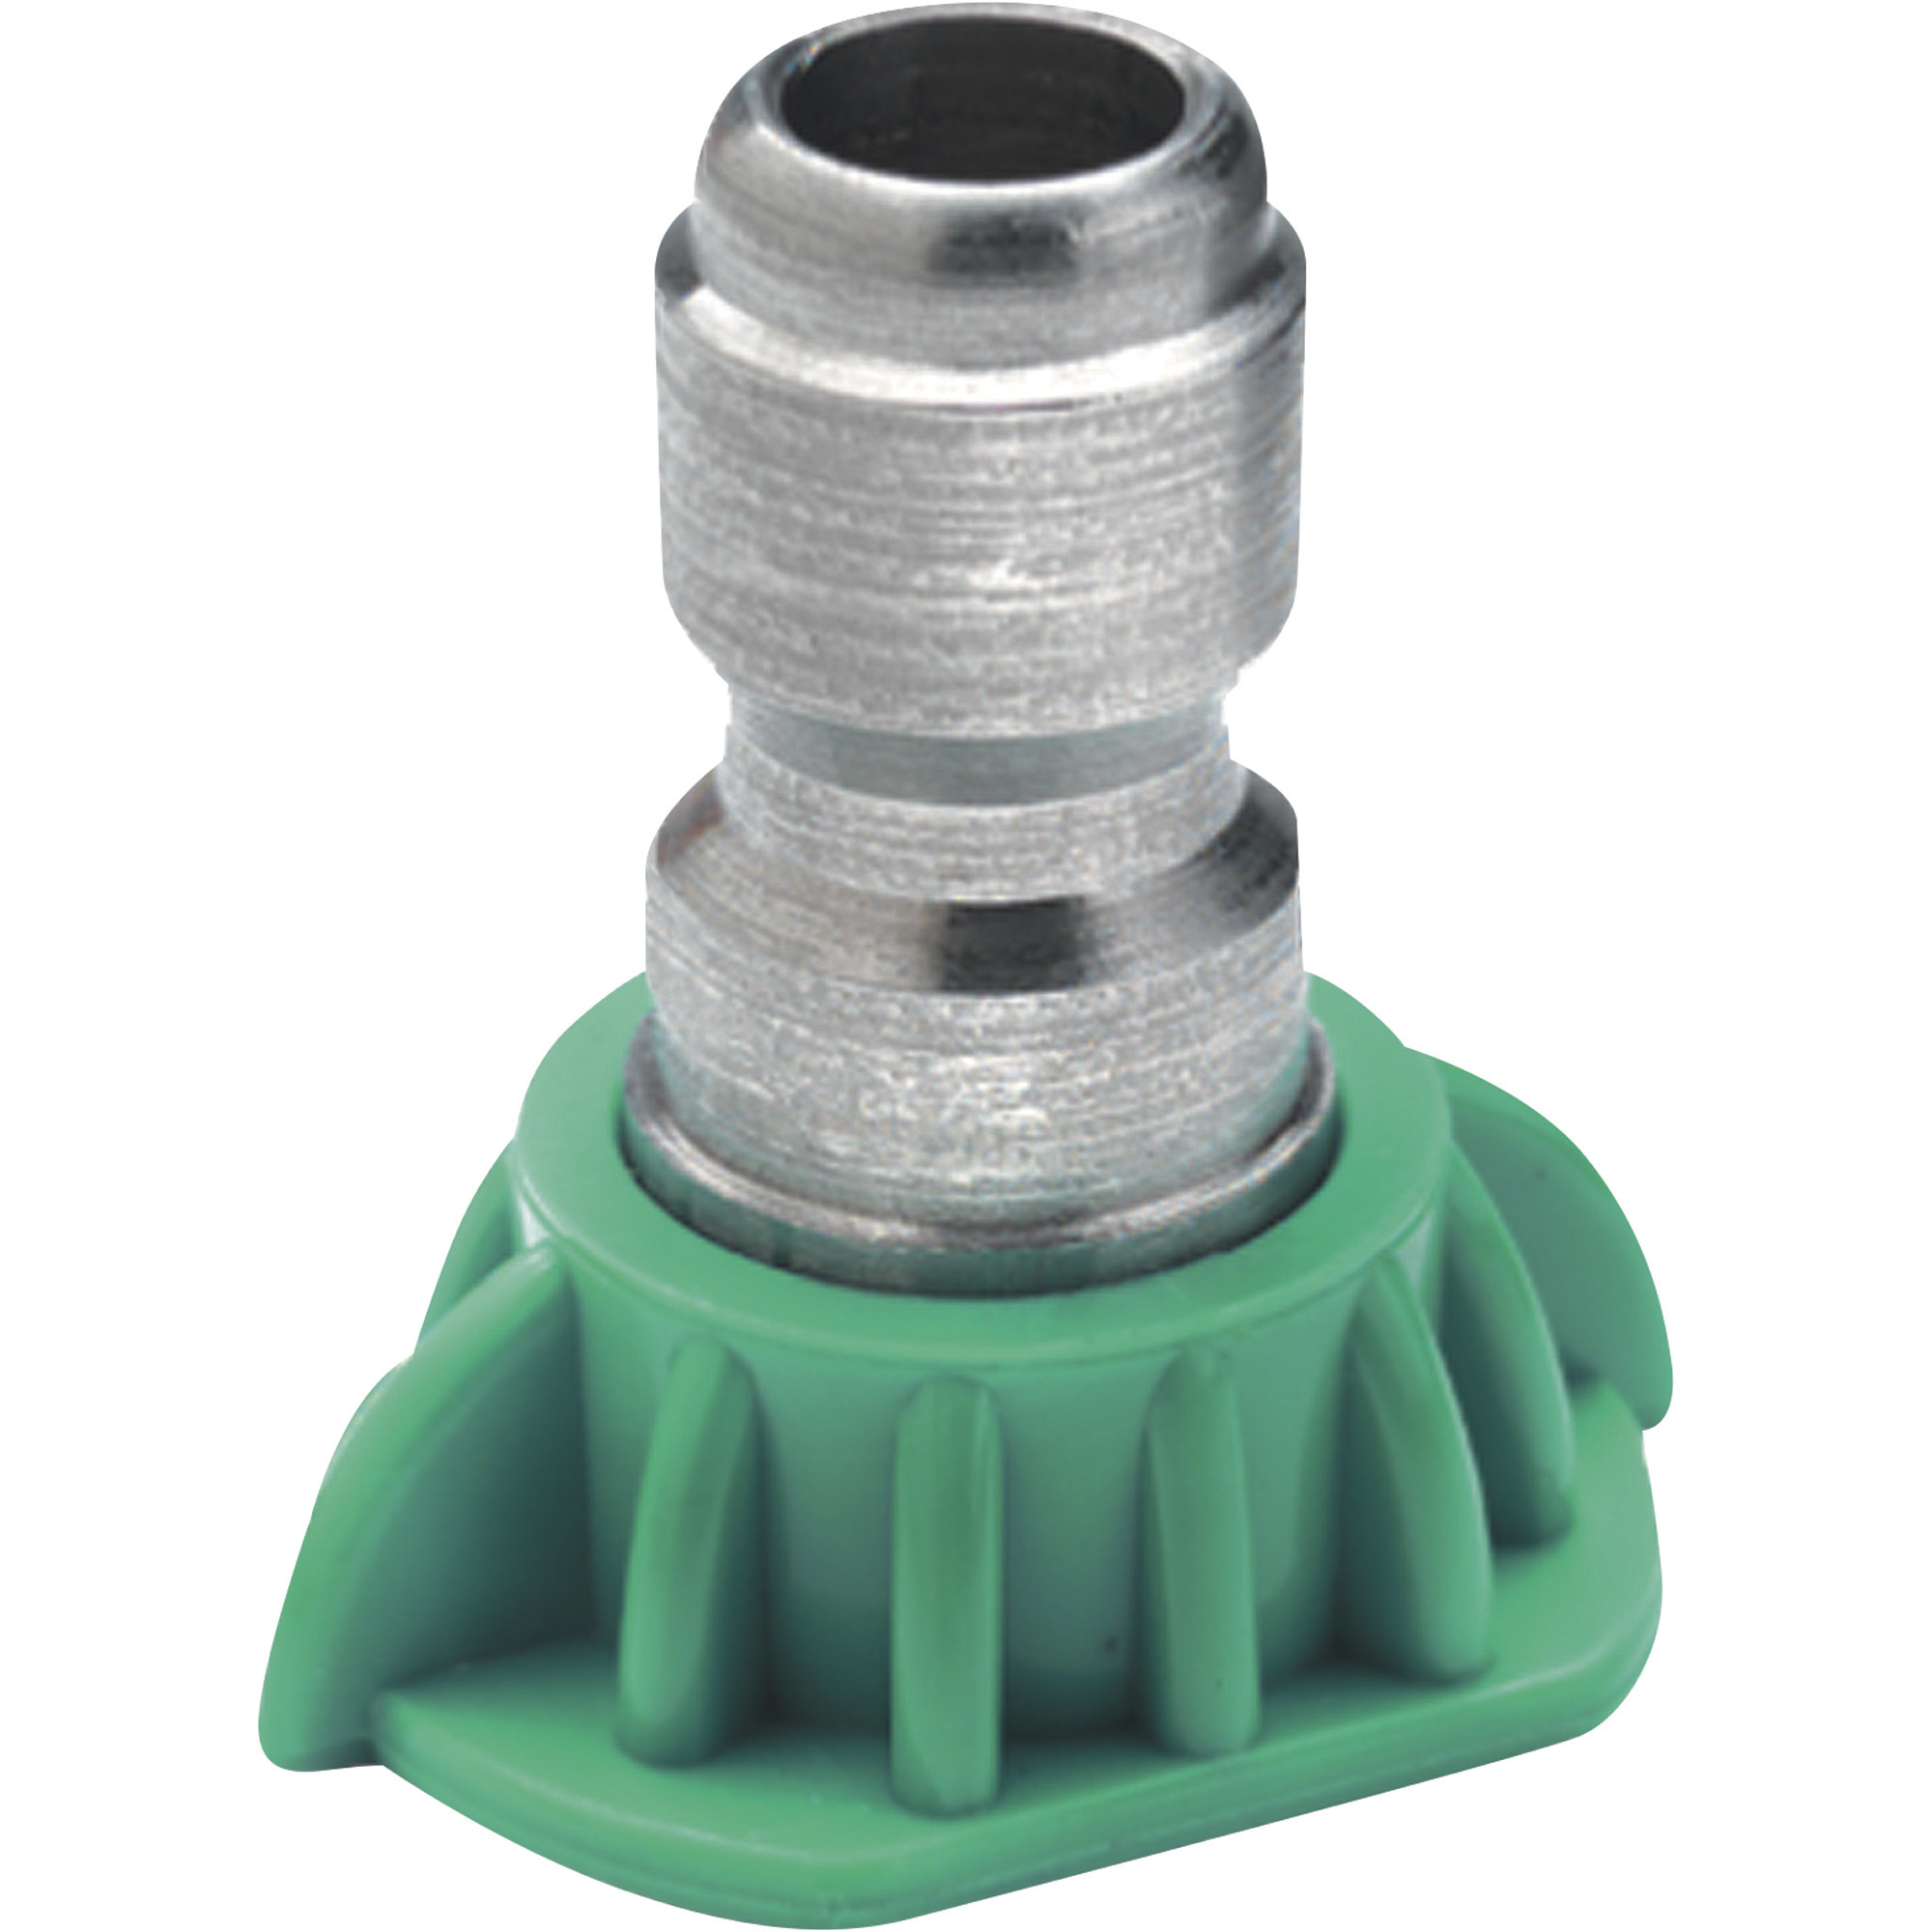 General Pump Pressure Washer Quick Couple Spray Nozzle â 2.5 Size, 25 Degree Spray, Model N25025QP